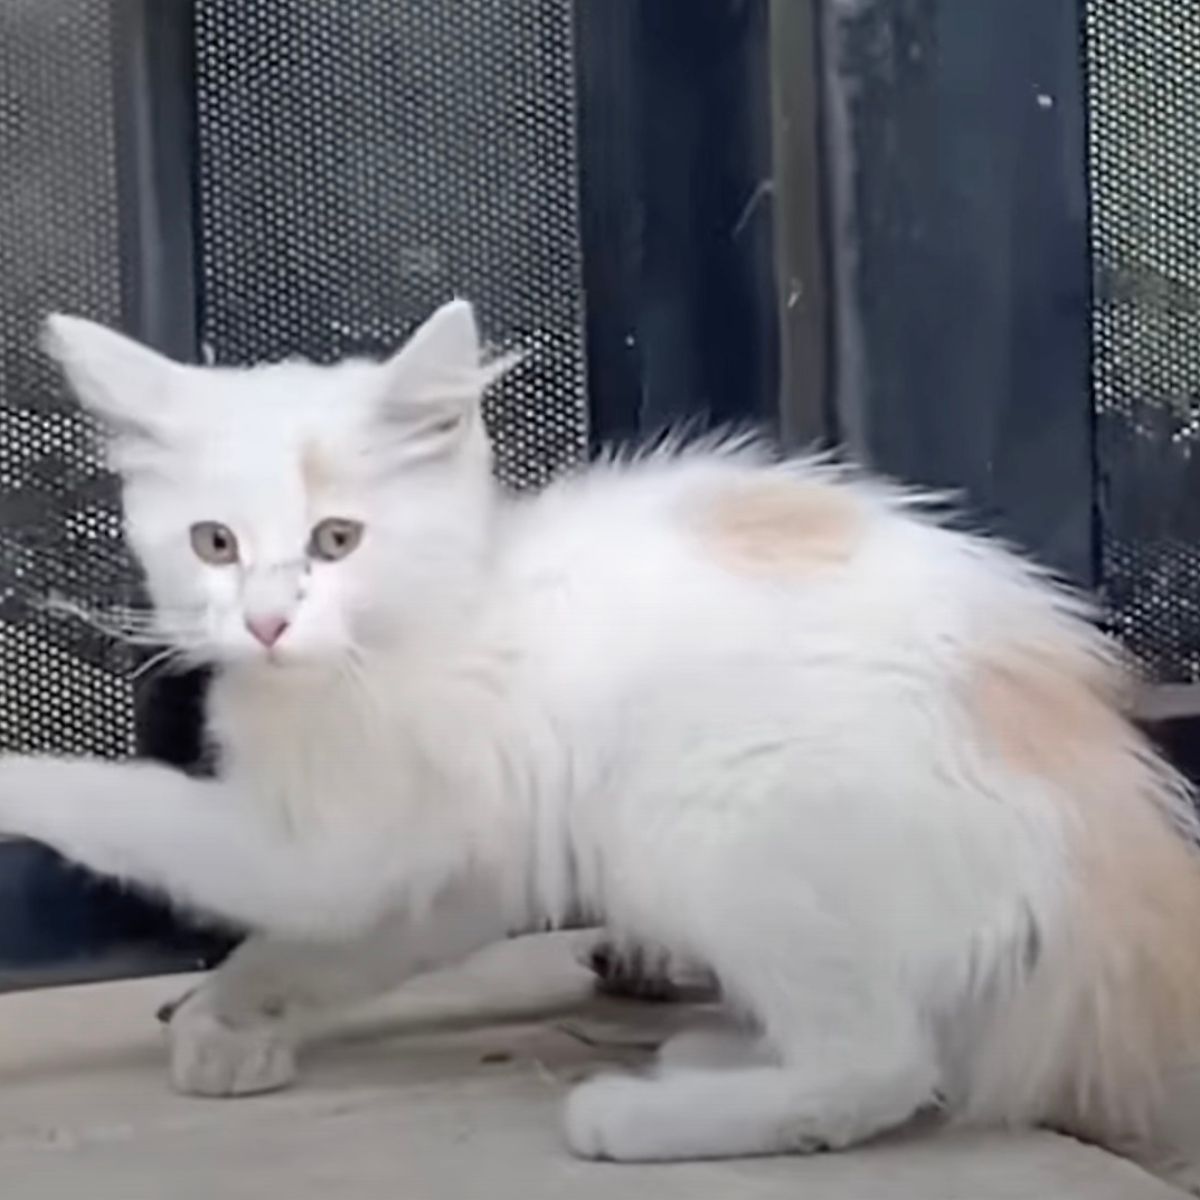 adorable white kitten